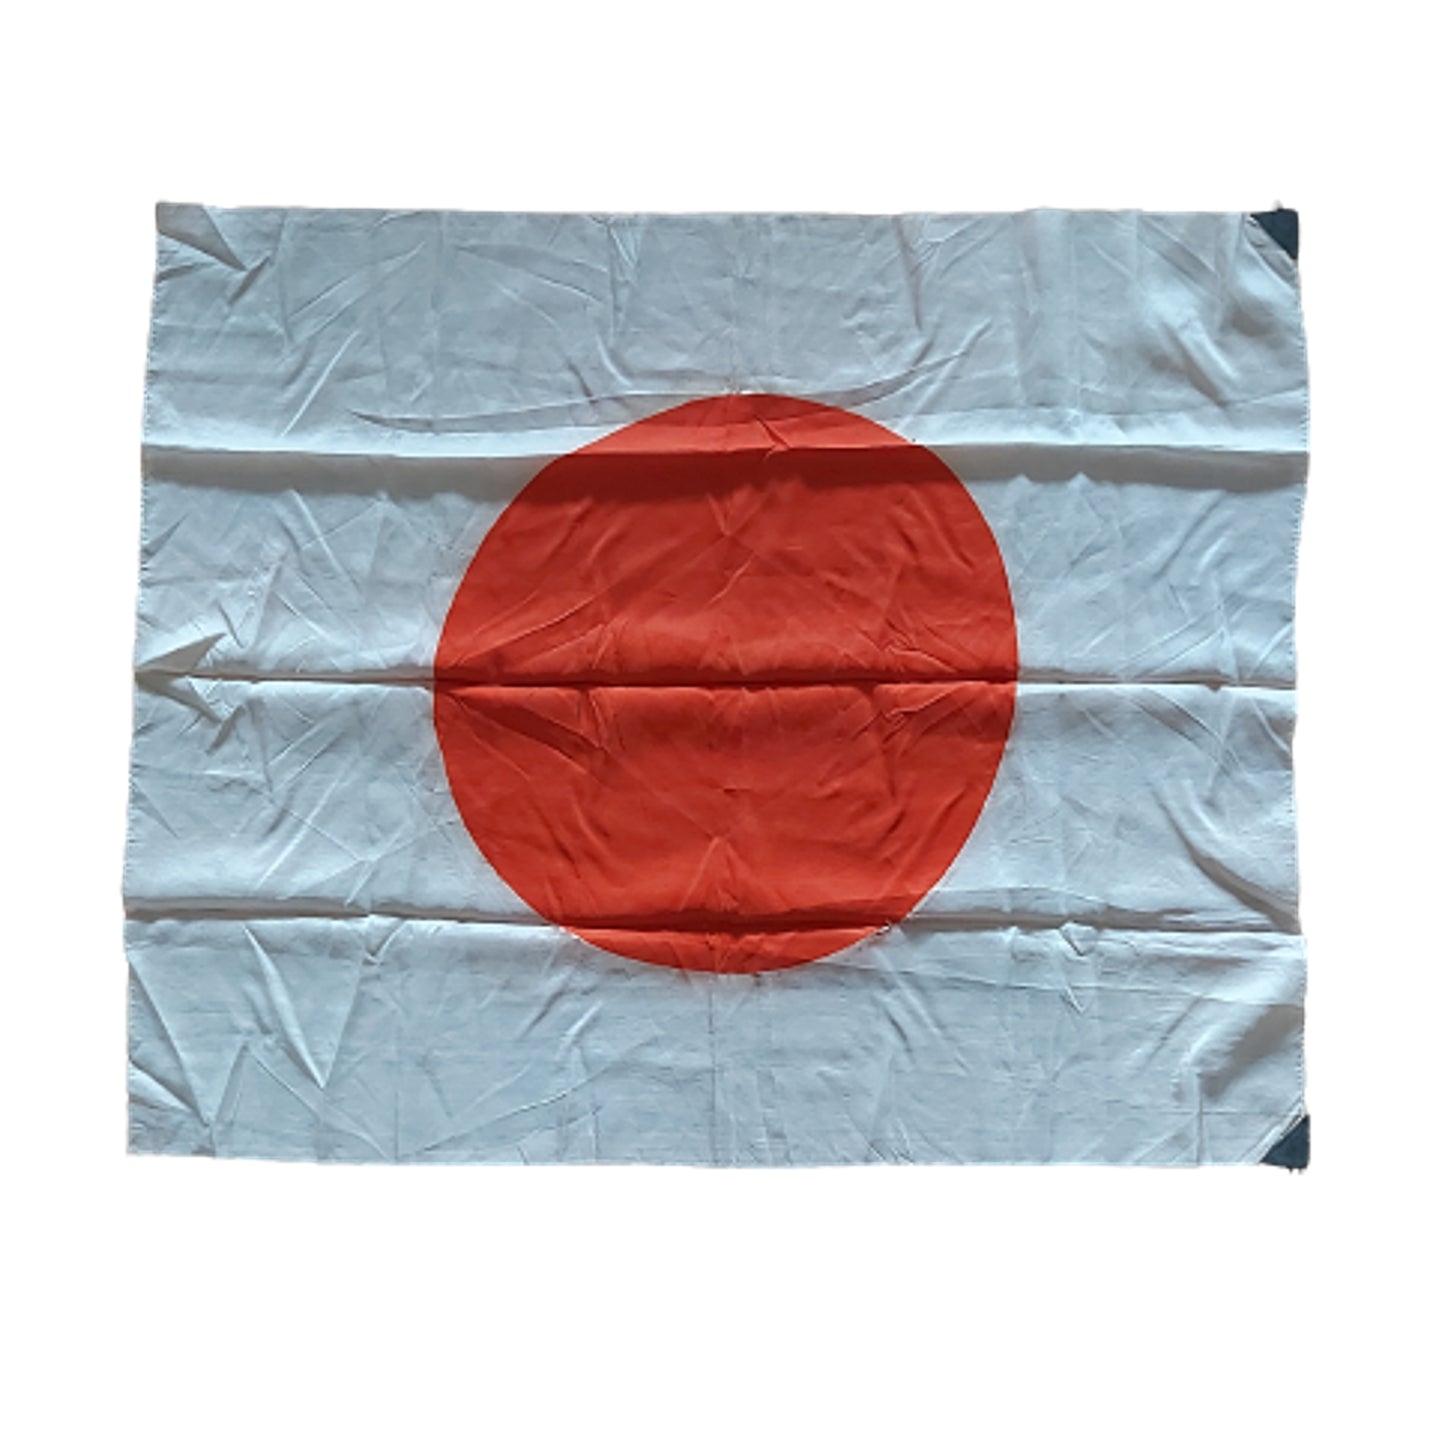 WW2 Japanese National Flag